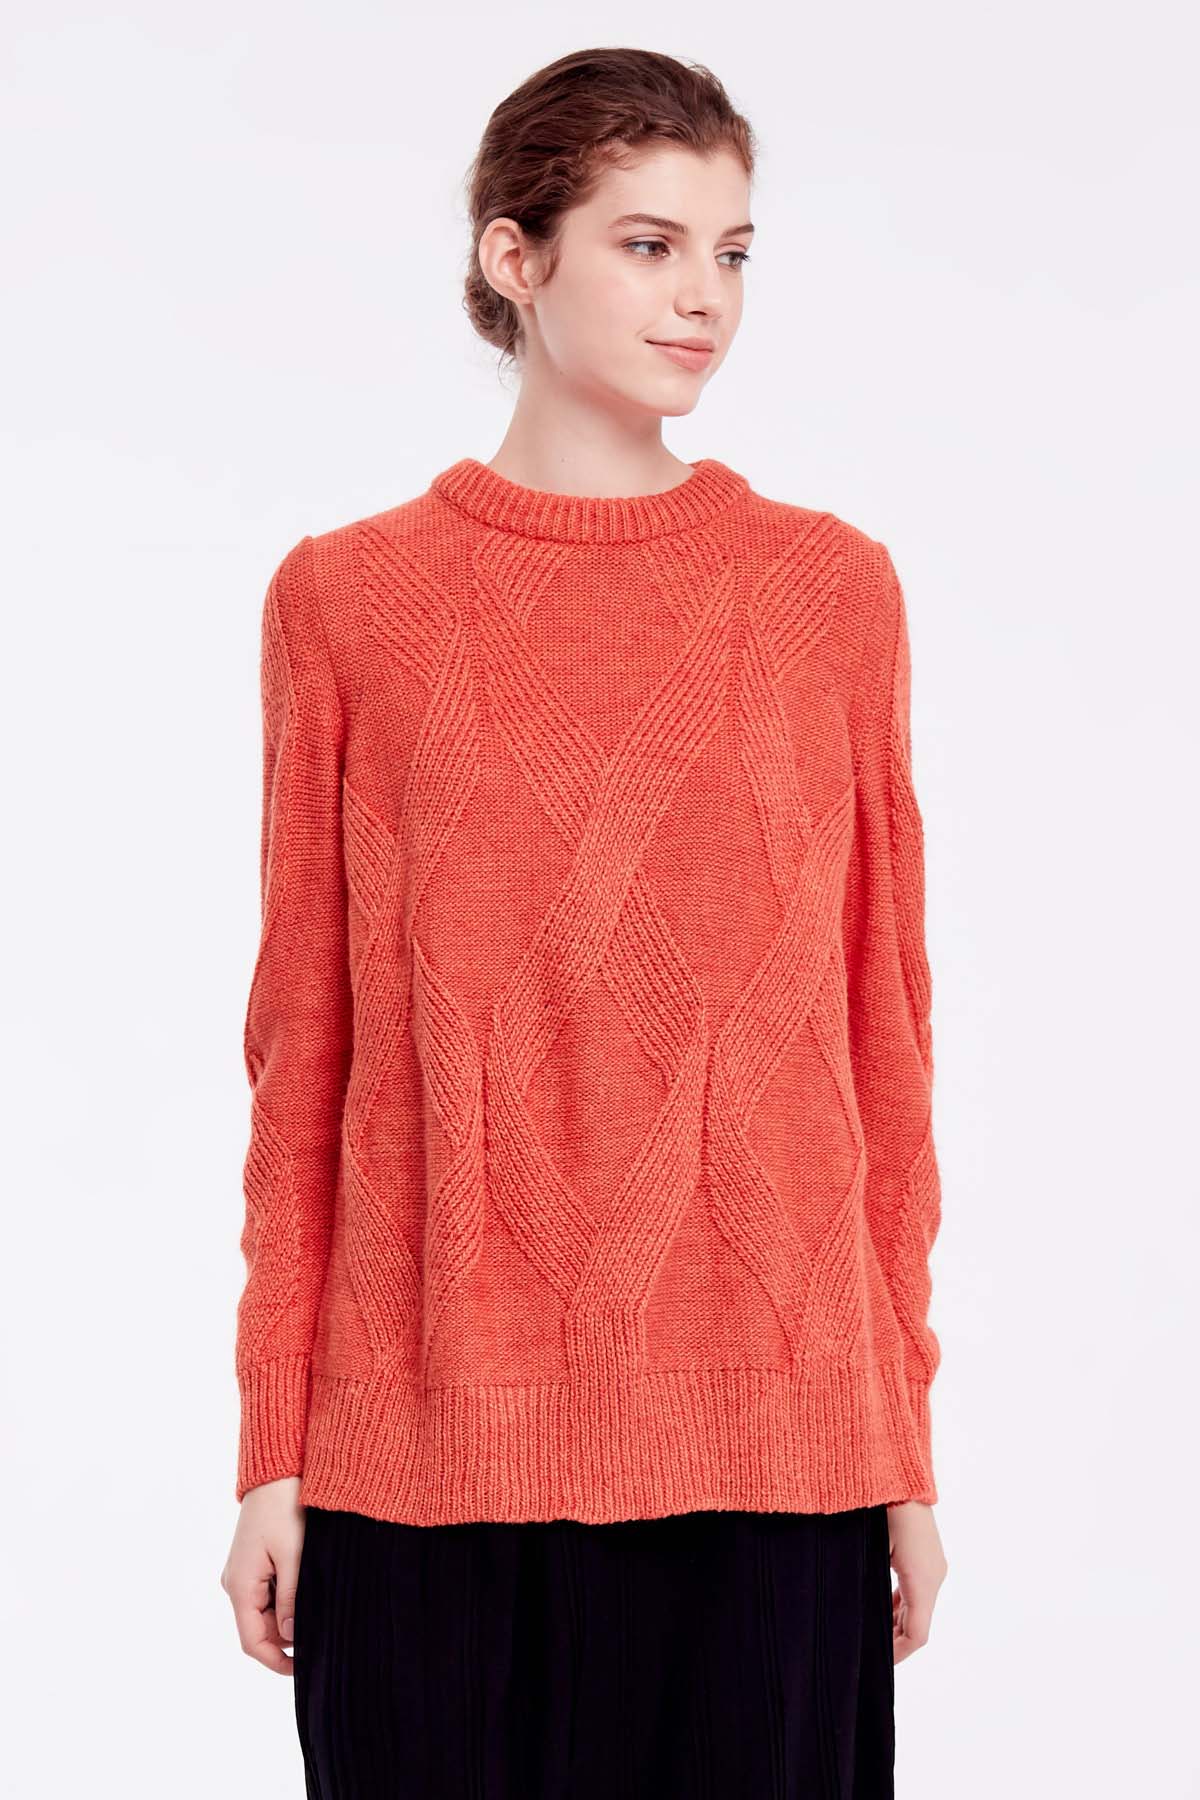 Orange free knit sweater, photo 1